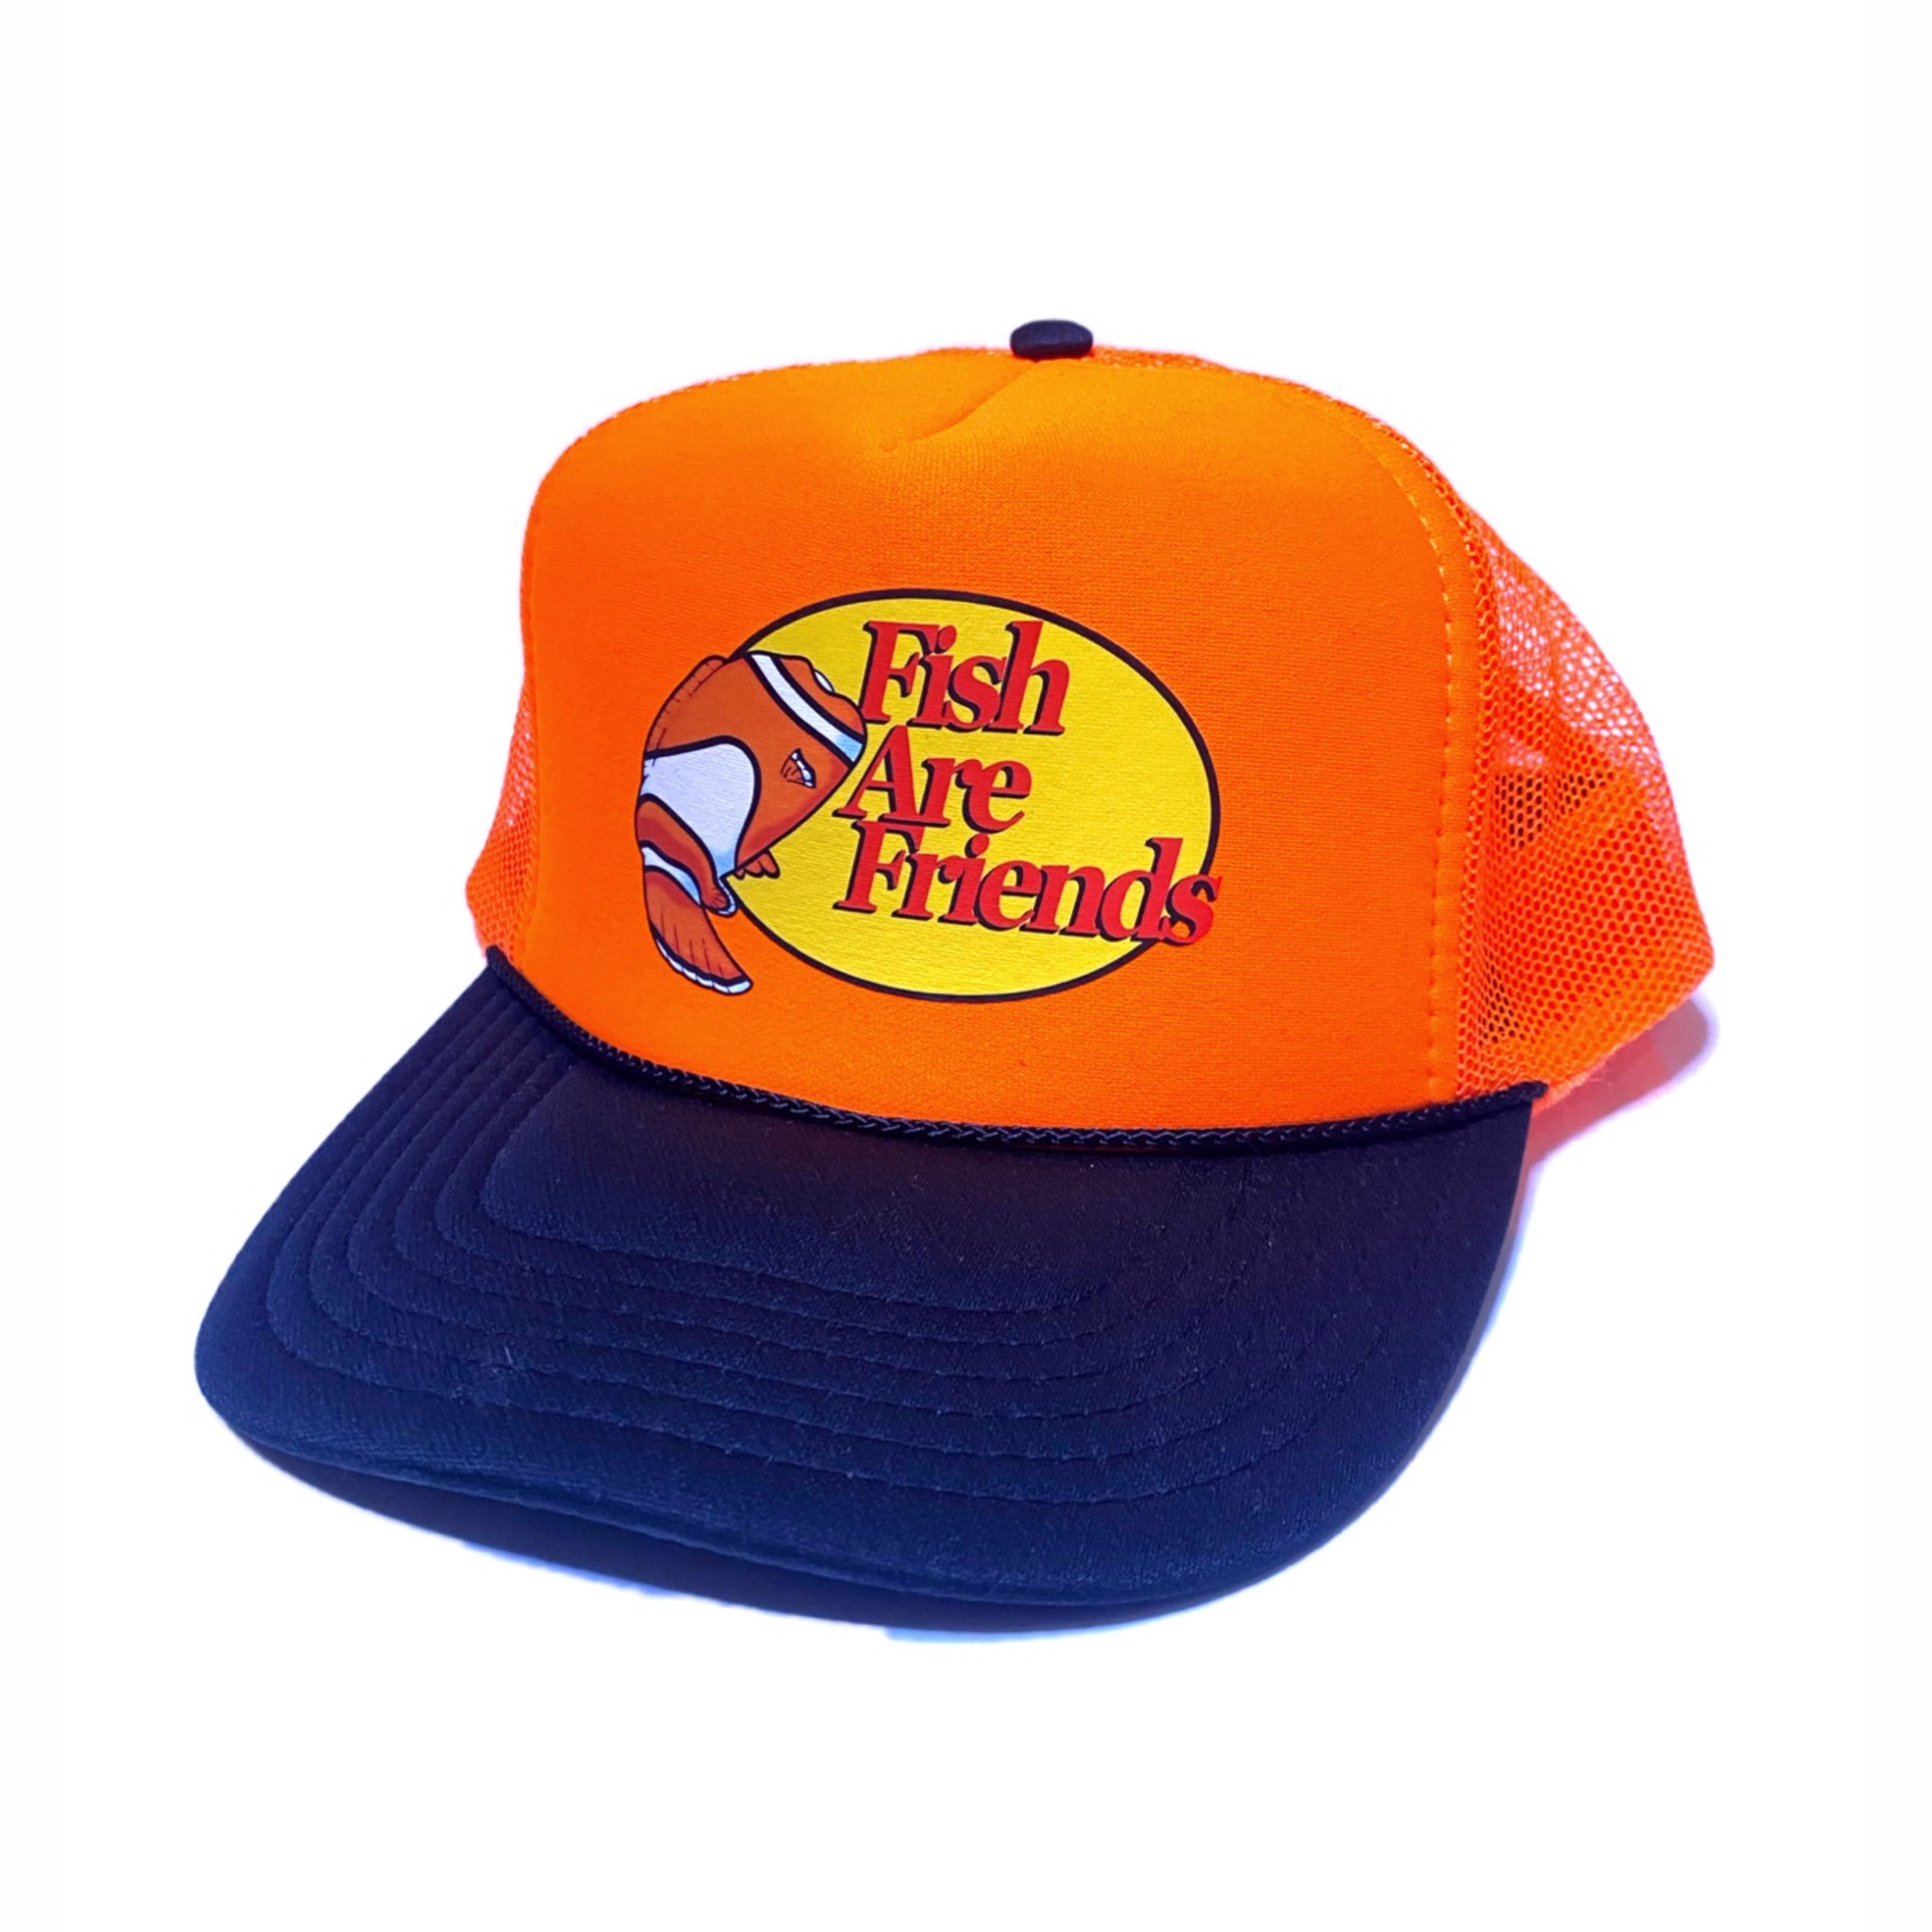 Fish Are Friends Trucker Hat - Orange - The Lost Bros